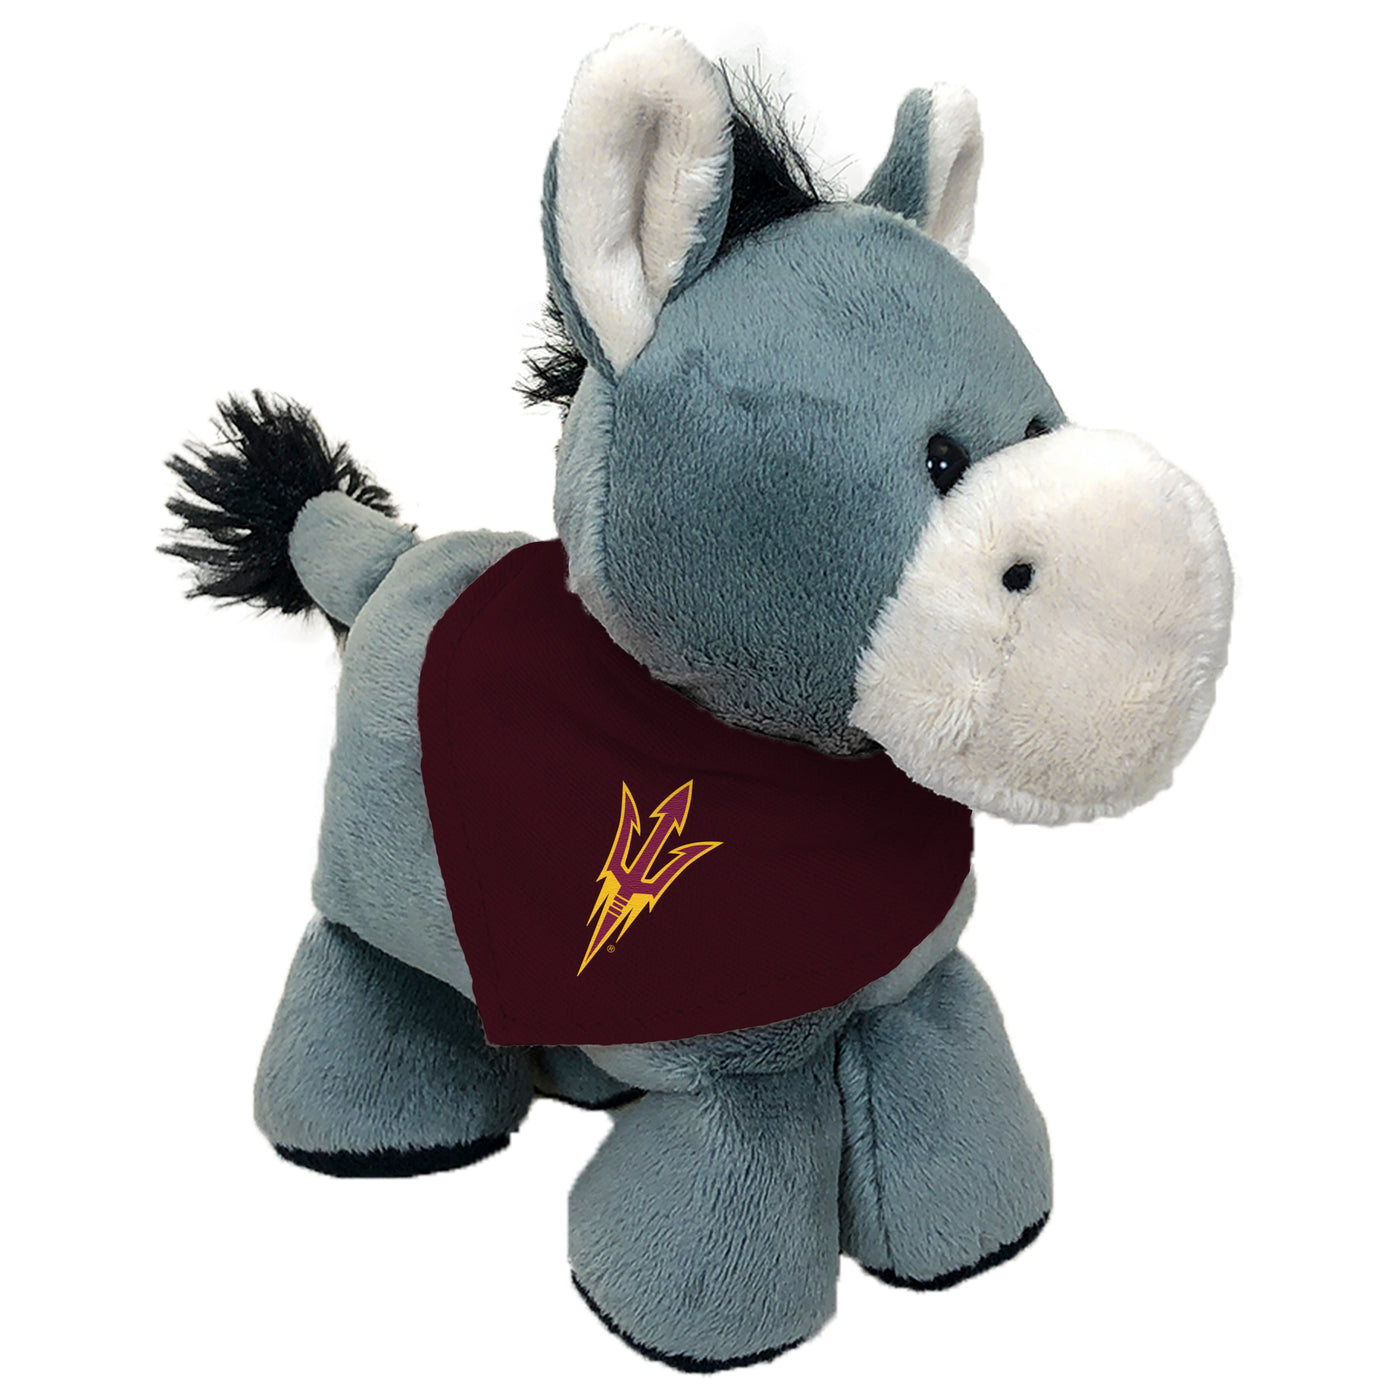 ASU Suffed gray donkey. Donkey is wearing a  maroon bandana  with a pitchfork logo. 